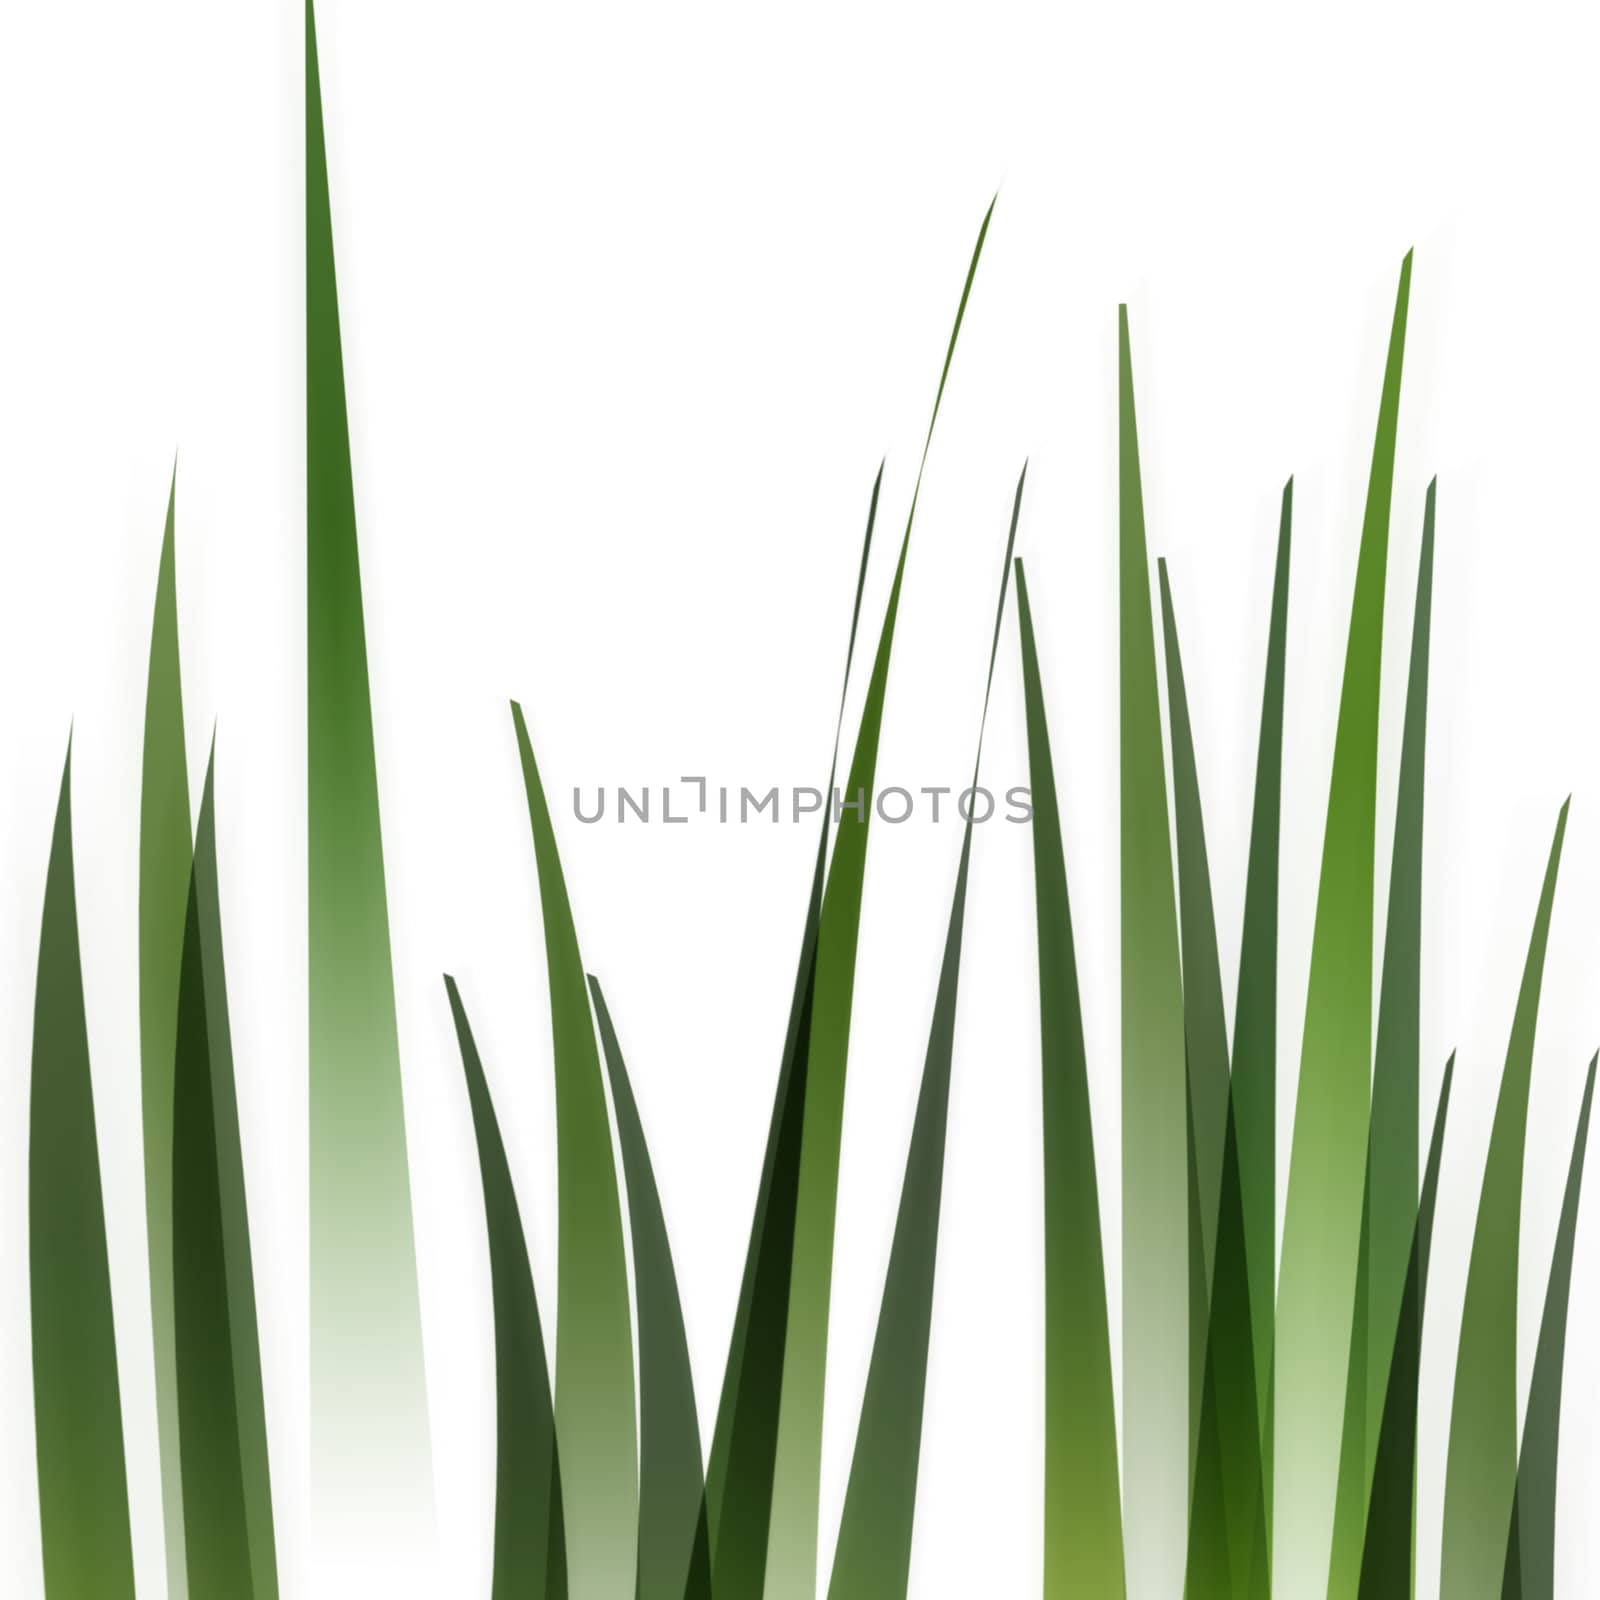 Illustration of green grass. Close up.